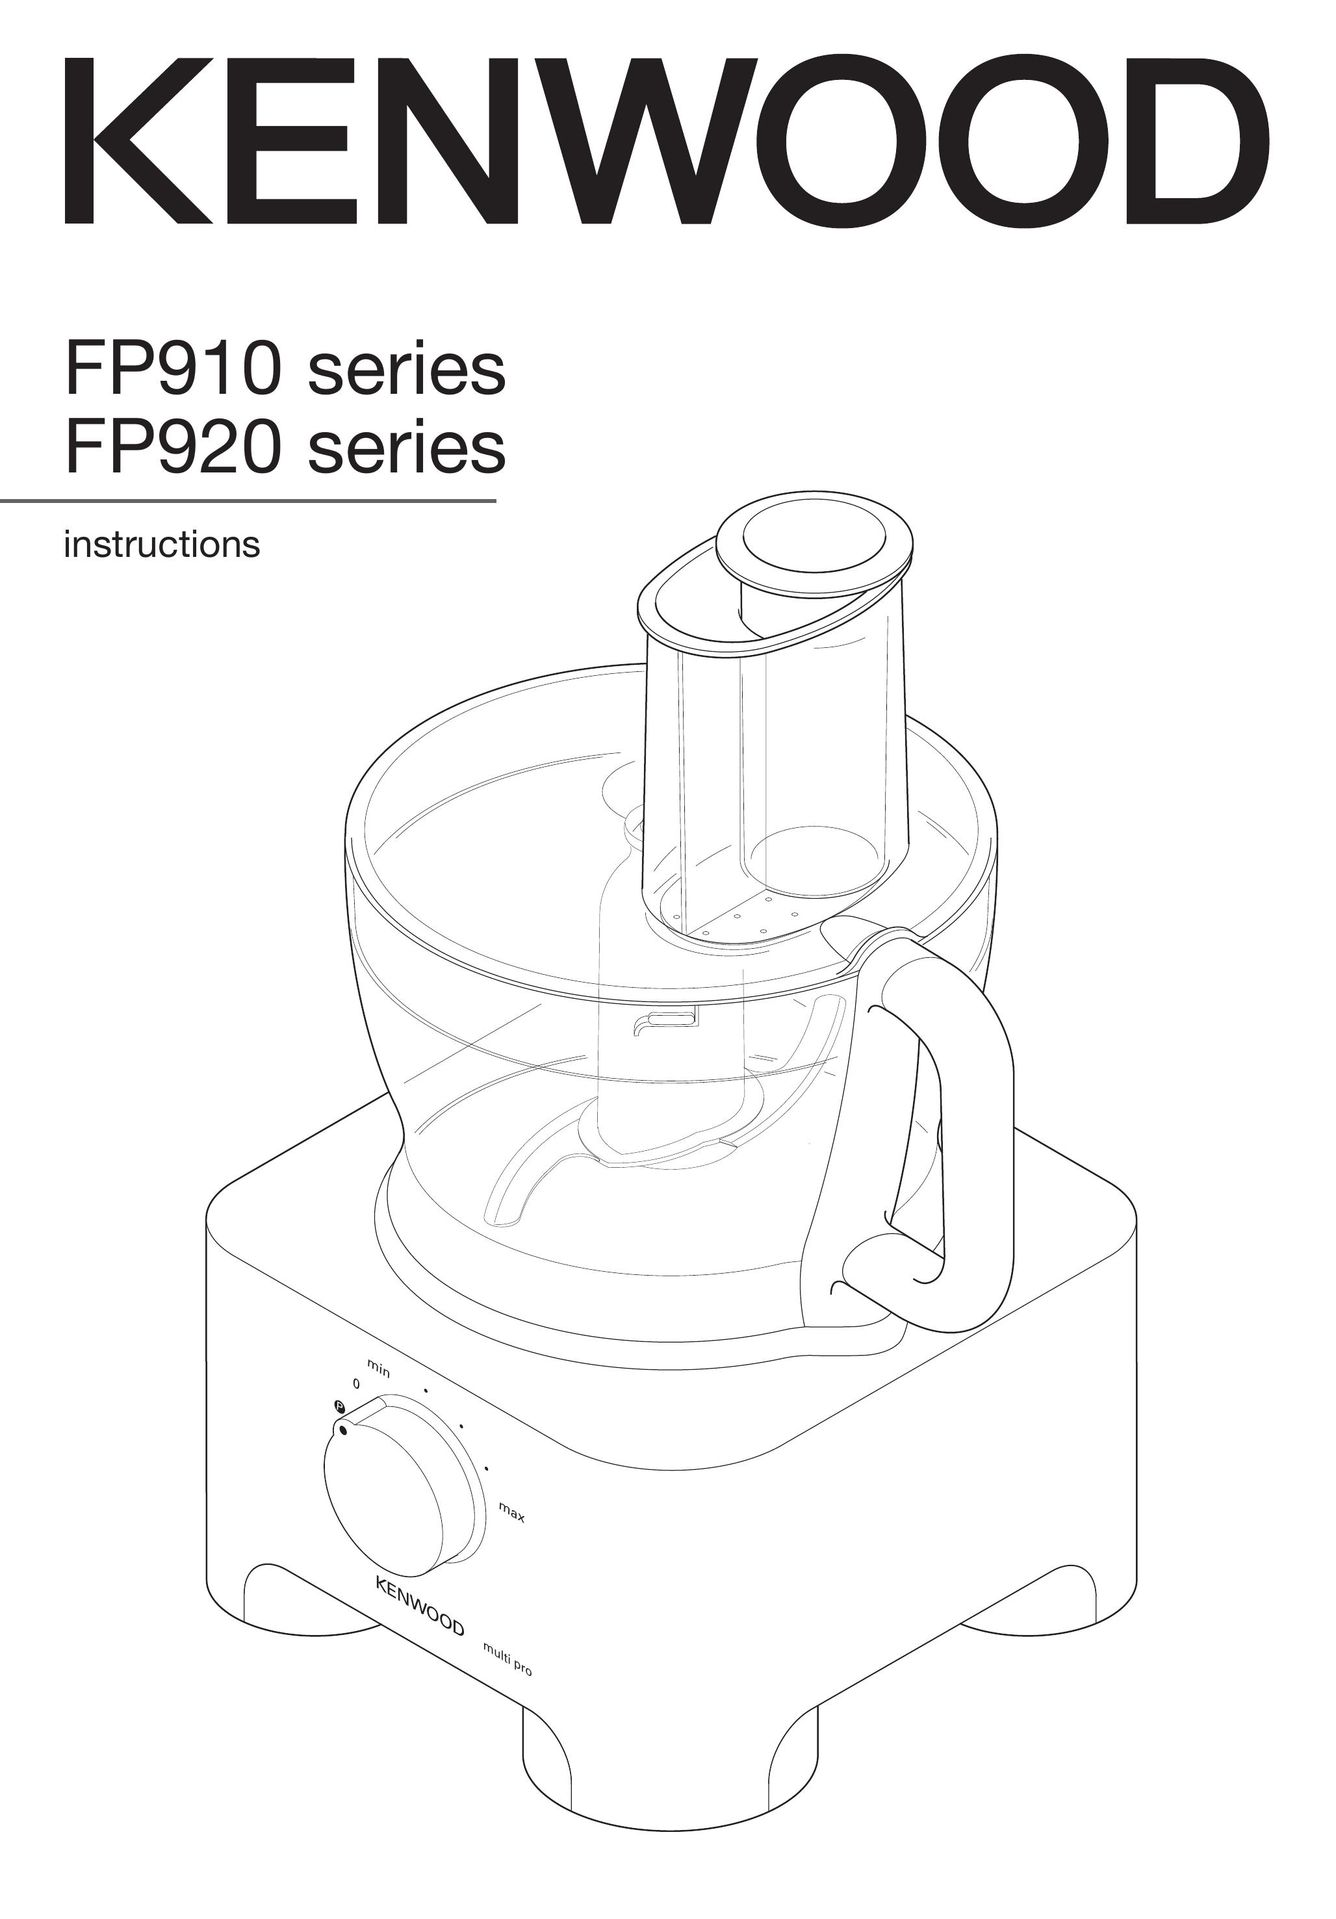 Kenwood FP910 series Food Processor User Manual